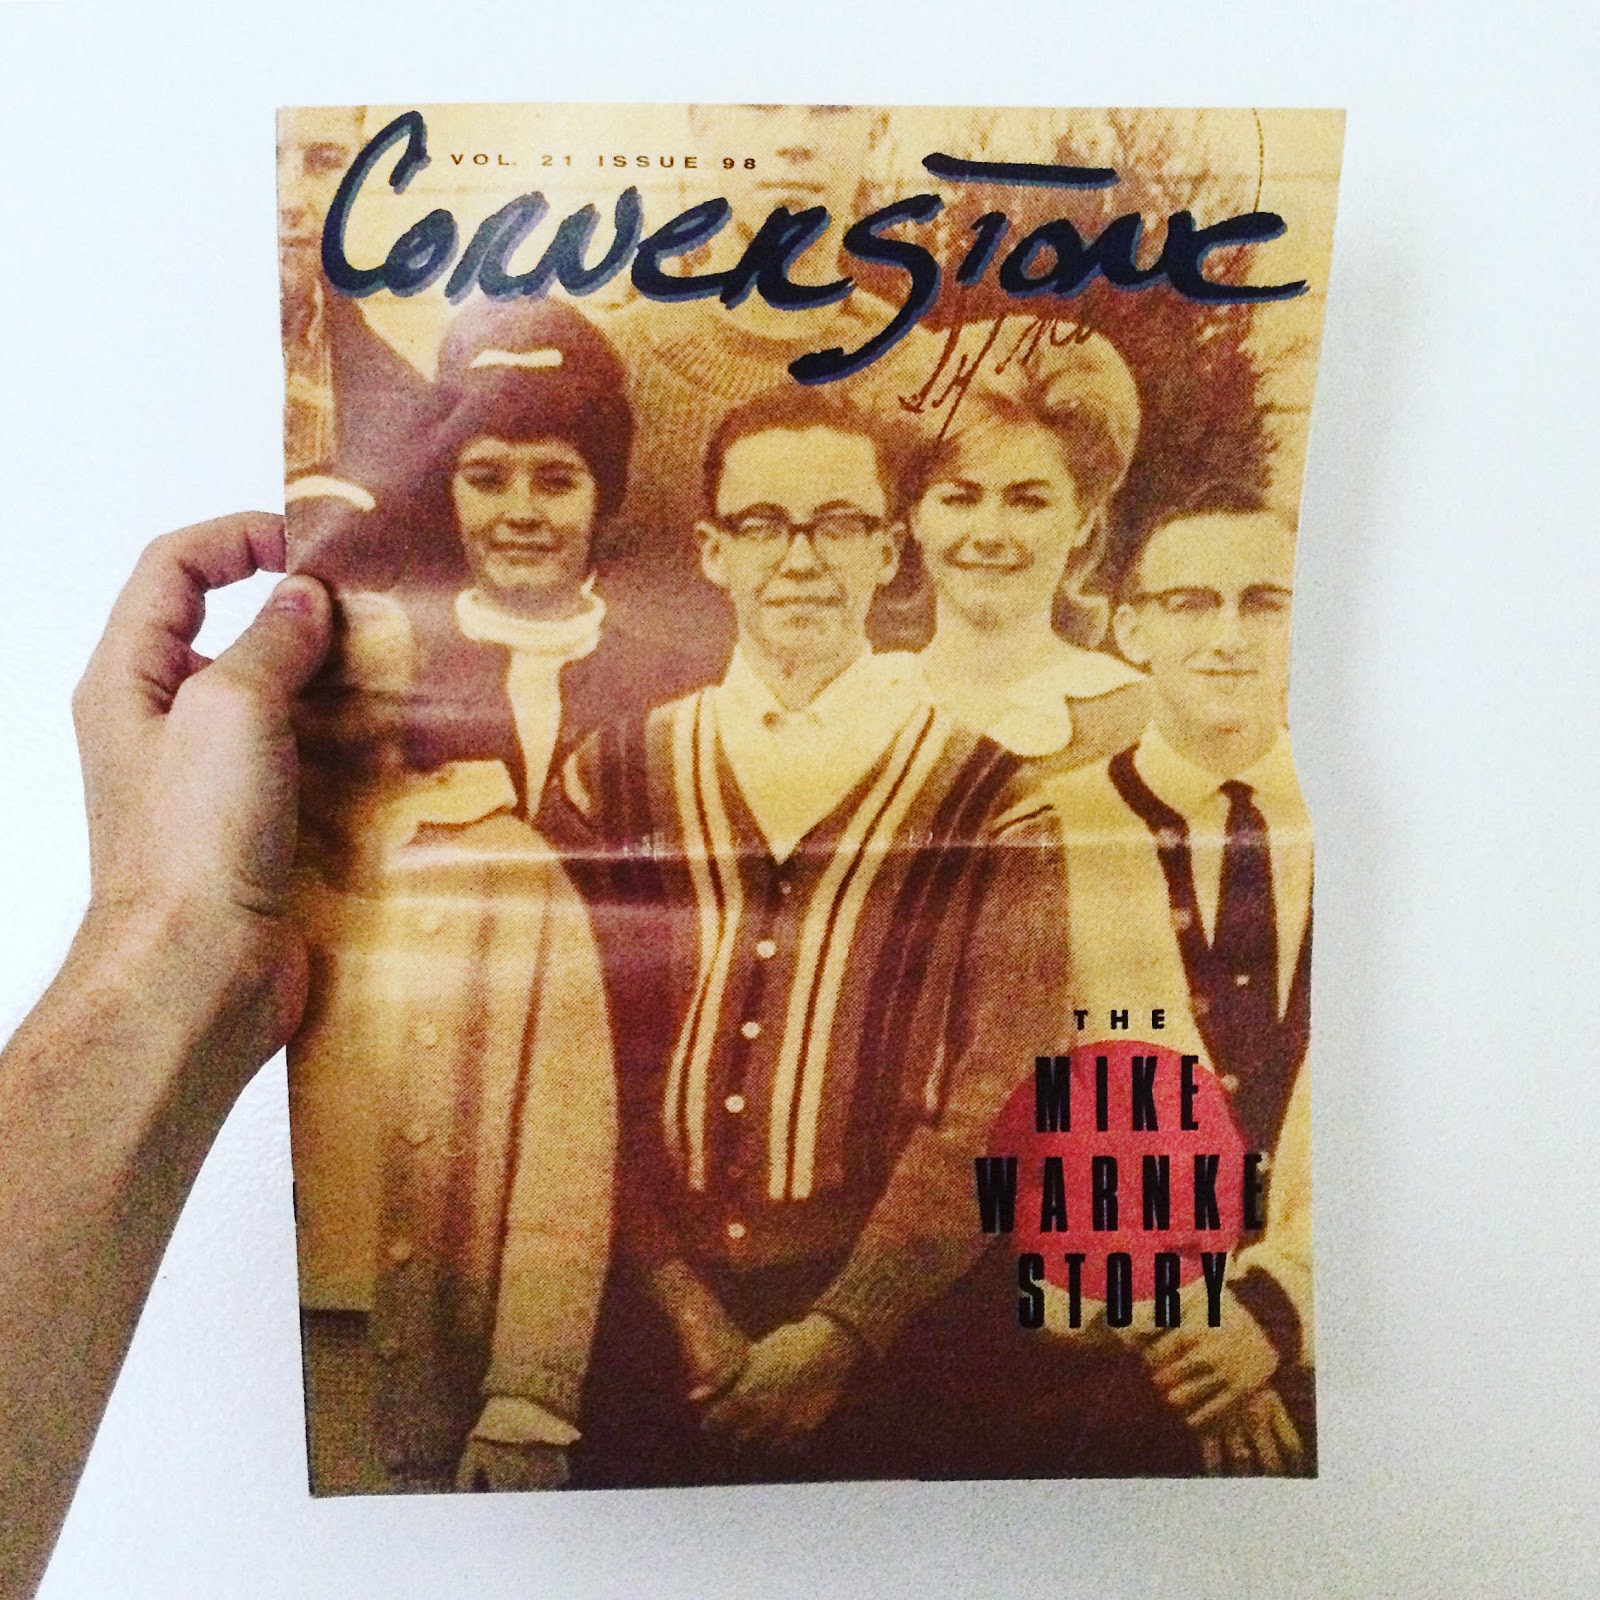 Cornerstone magazine, Volume 21, Issue 98 – 1992